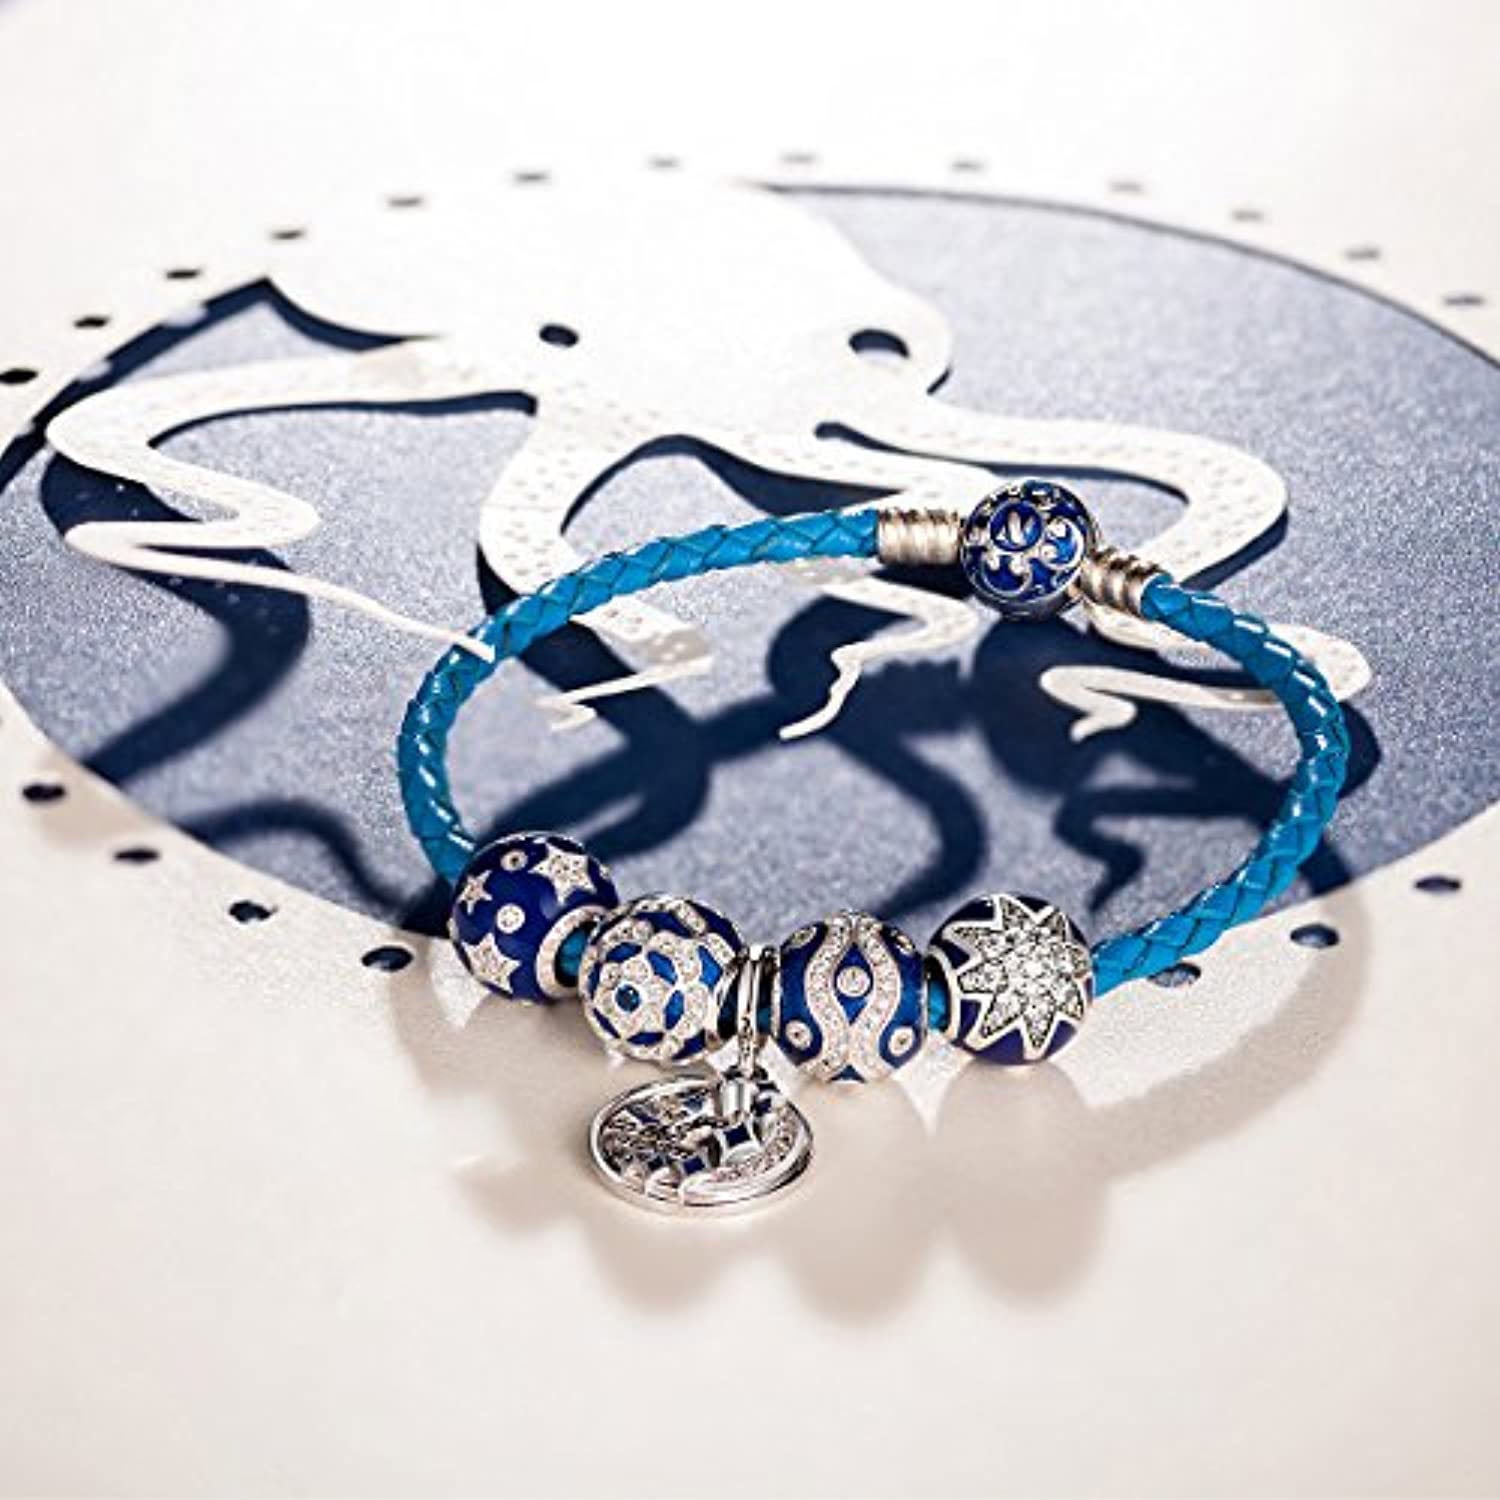 Aggregate more than 149 dangle charm bracelet